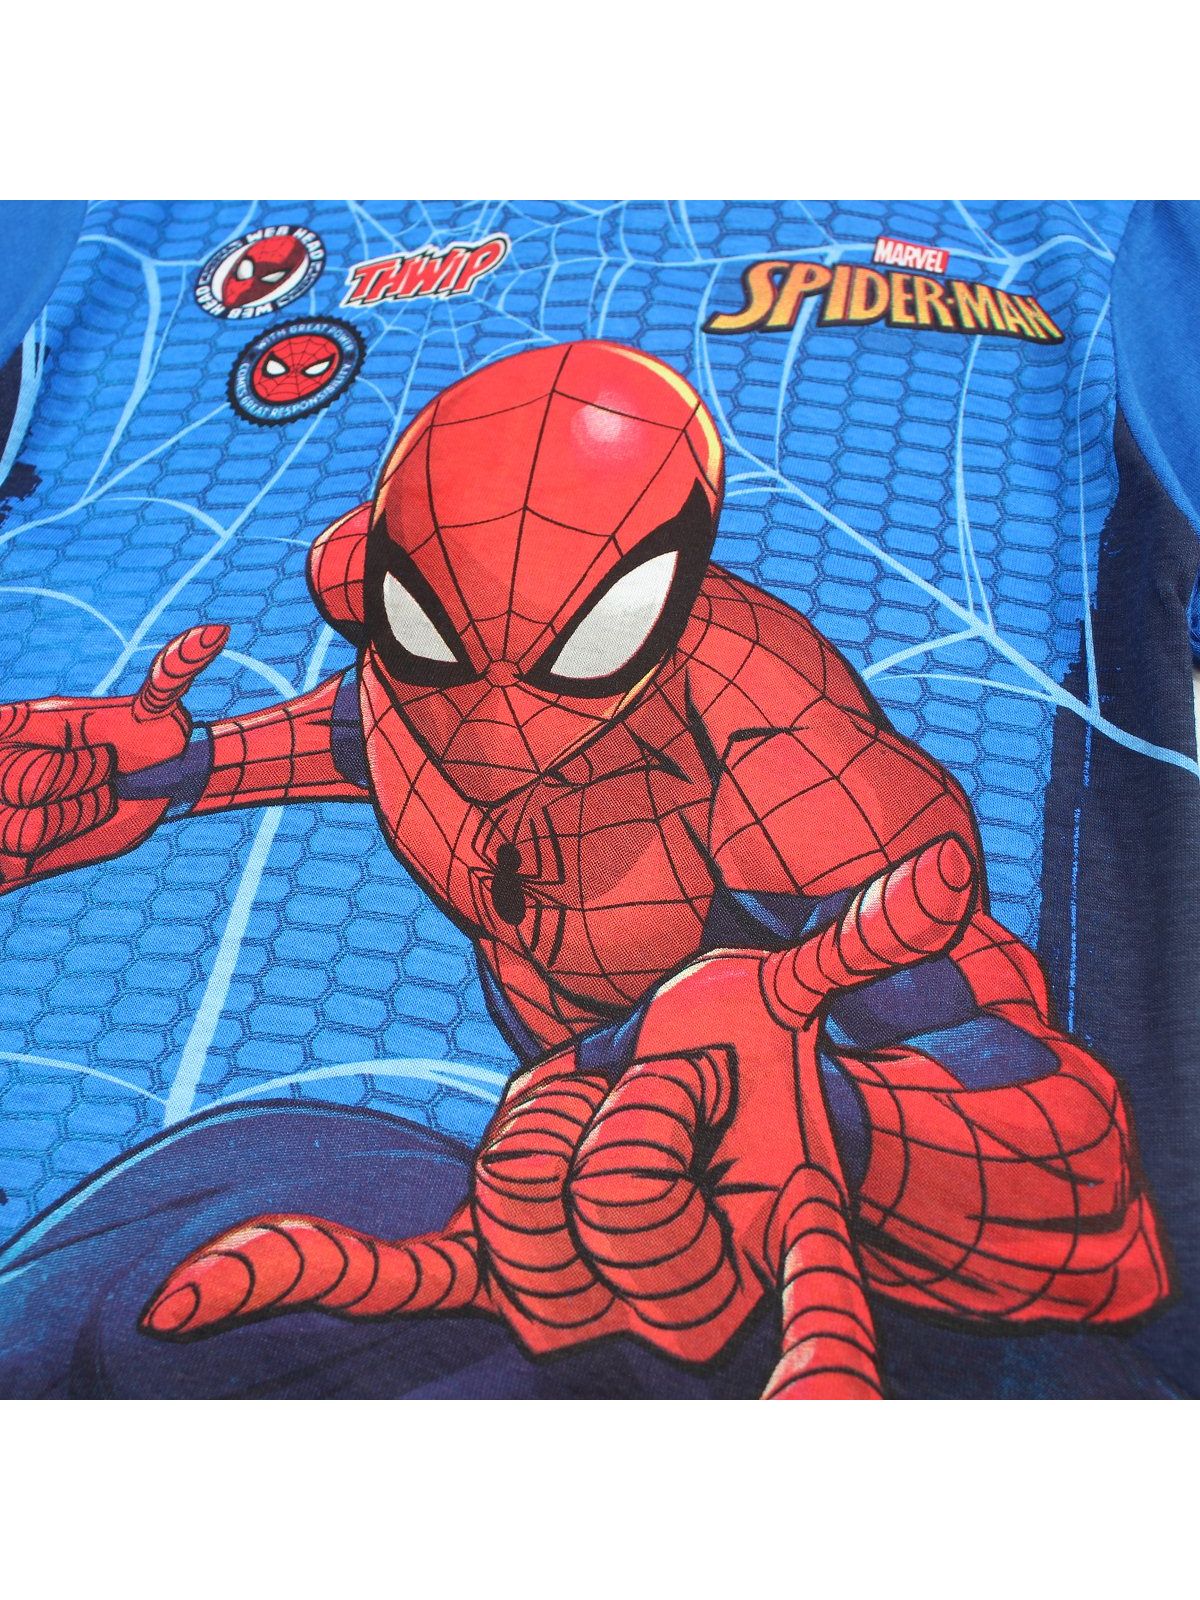 Camiseta del hombre araña.